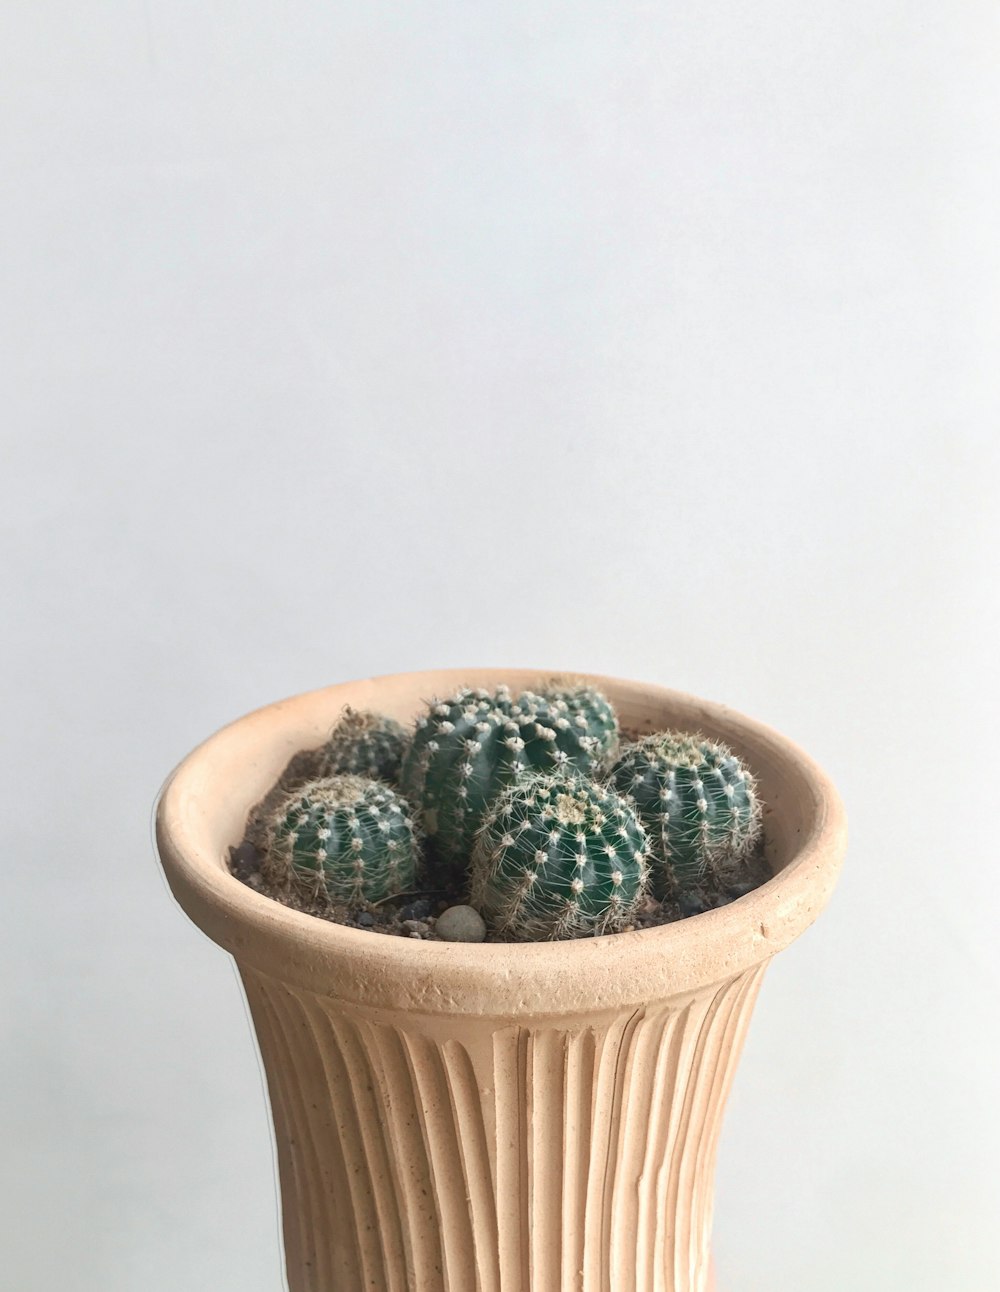 a small cactus in a white ceramic pot